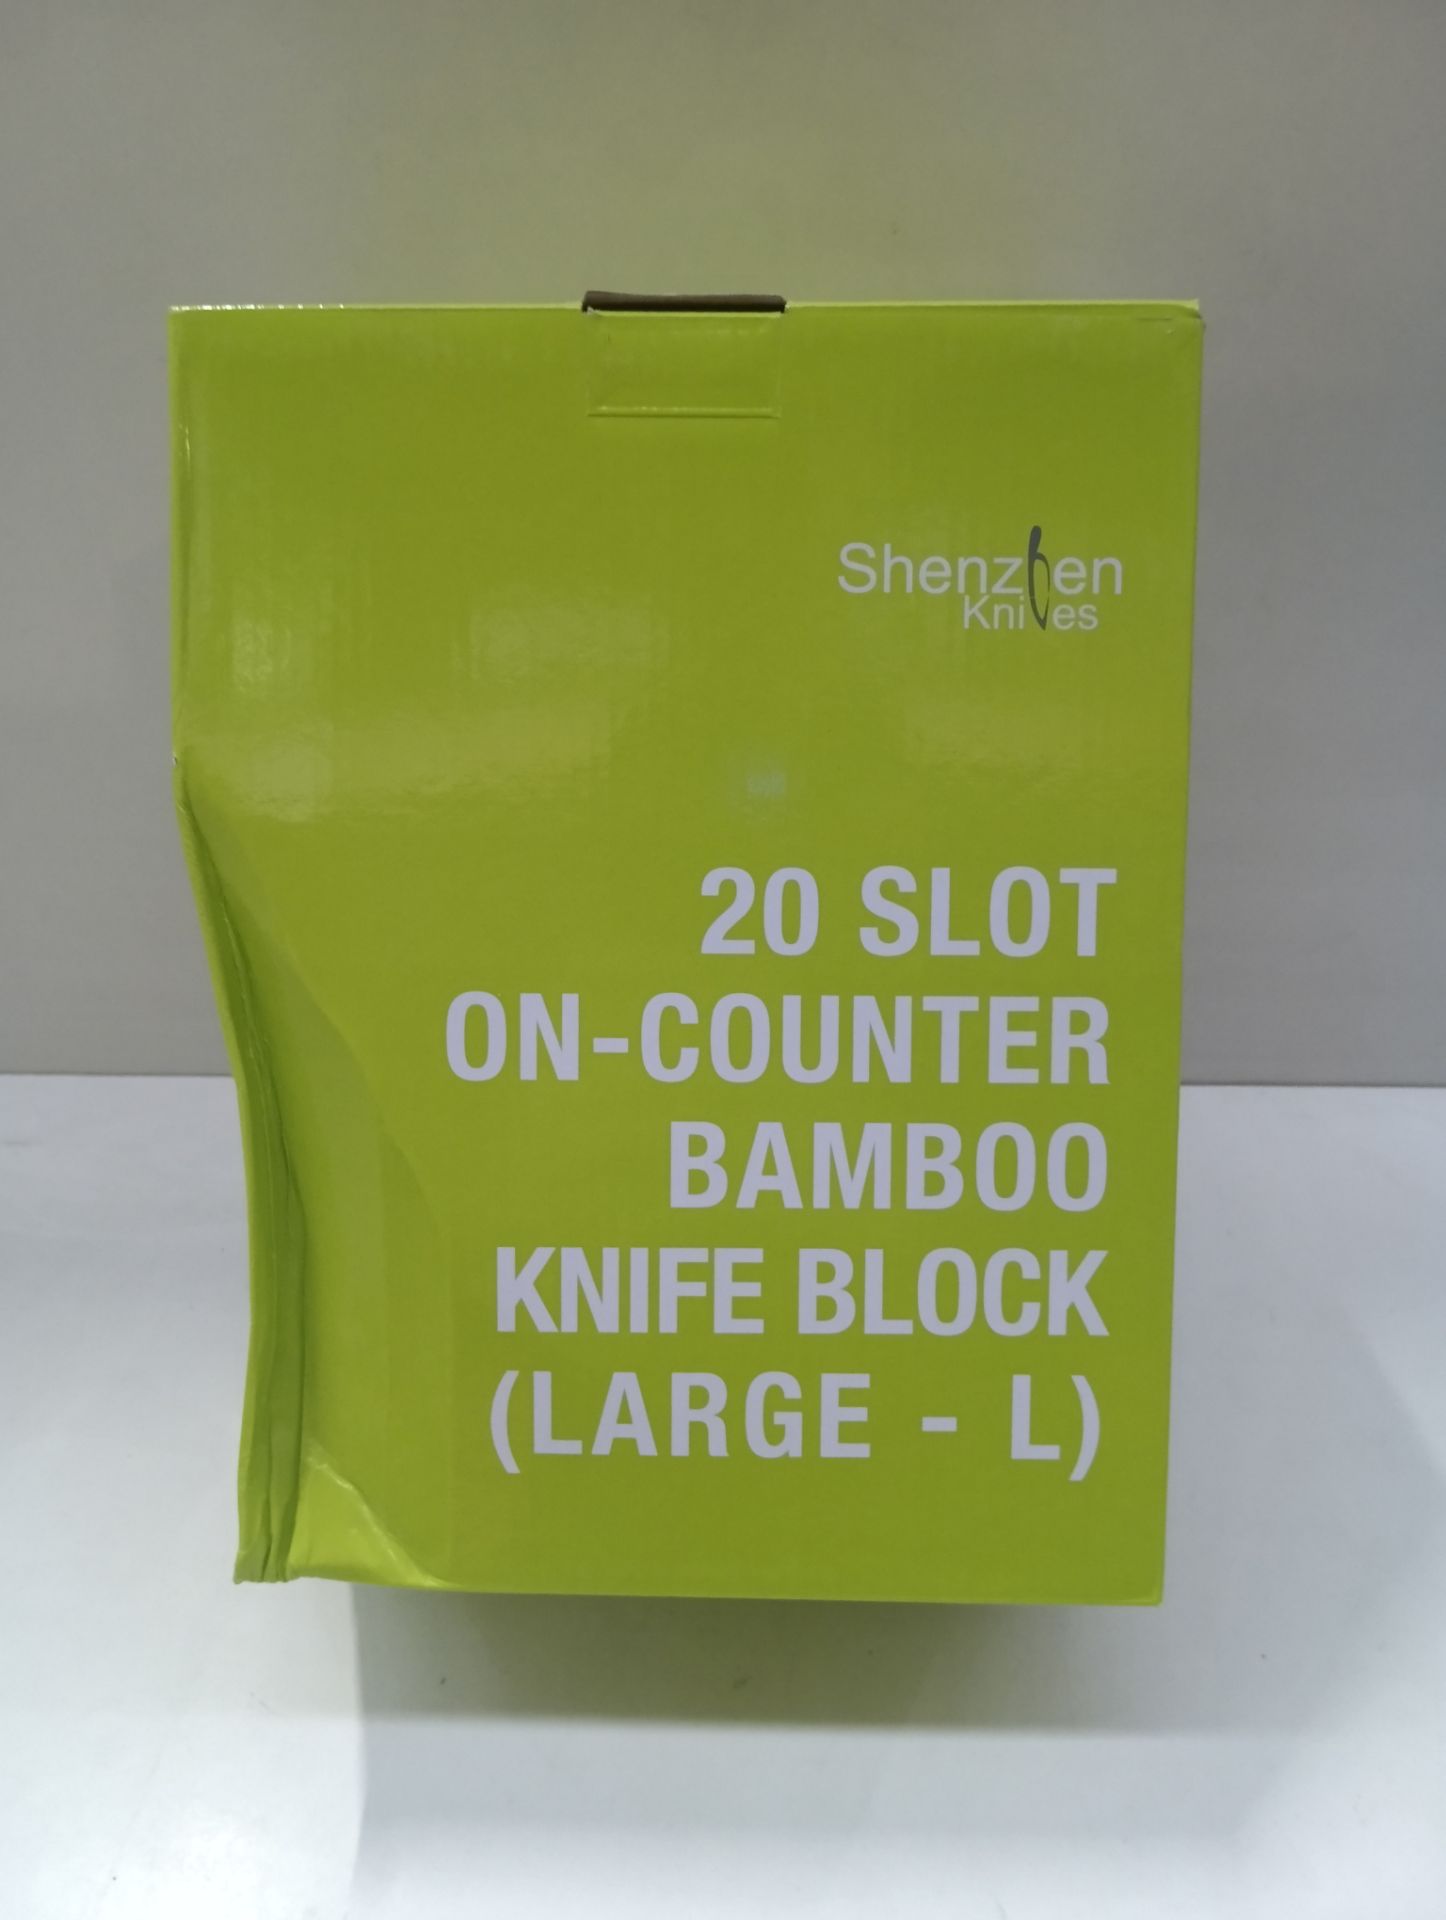 SHENZEN KINVES 20 SLOT ON COUNTER BAMBOO KNIFE BLOCK RRP £40